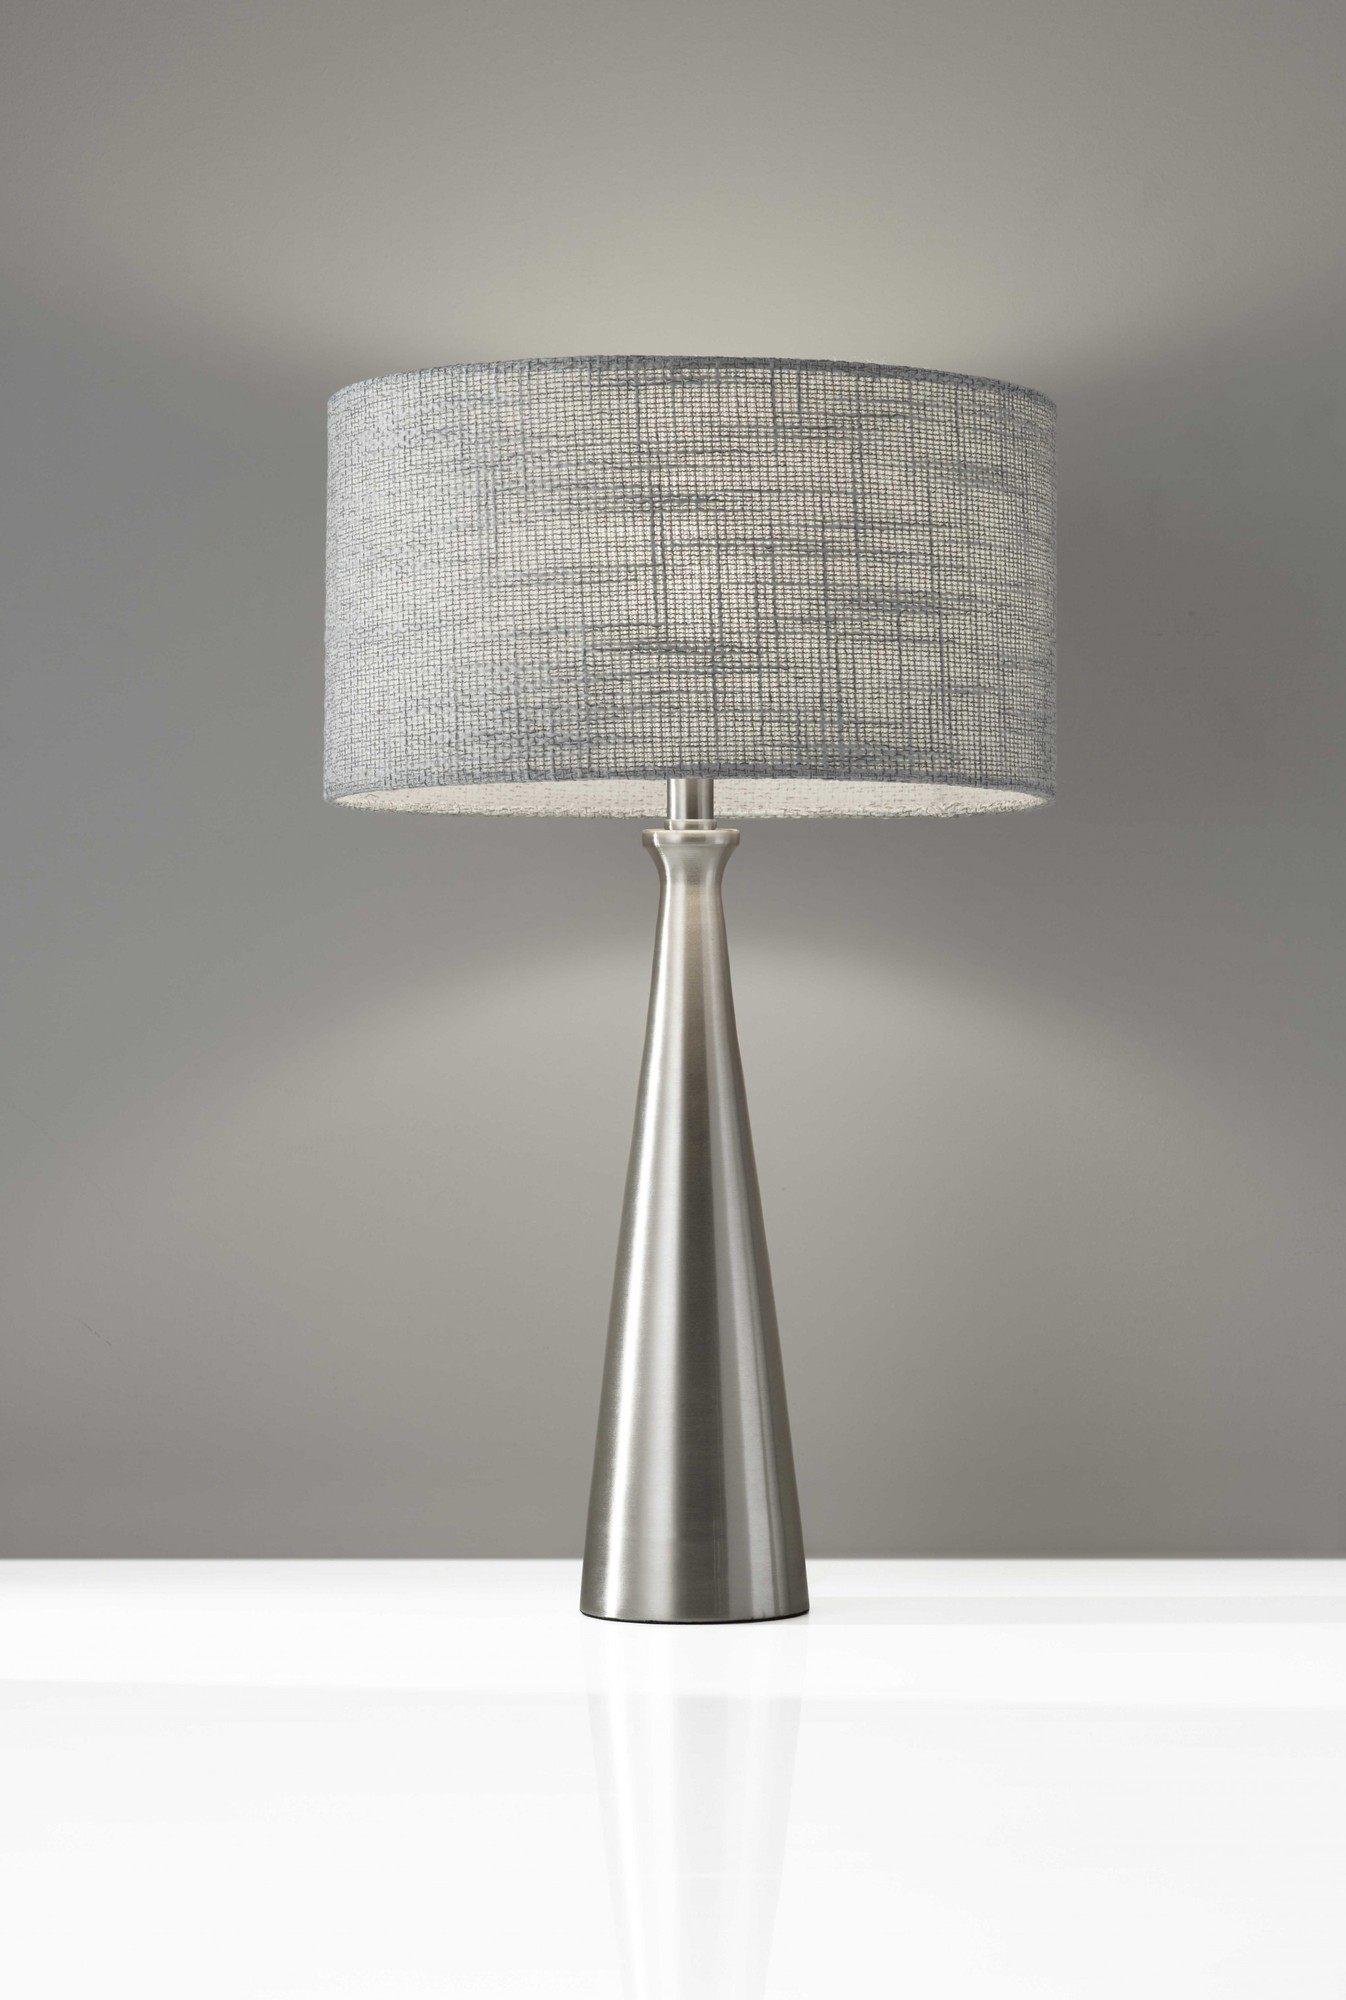 13" X 13" X 21.5" Brushed Steel Metal Table Lamp